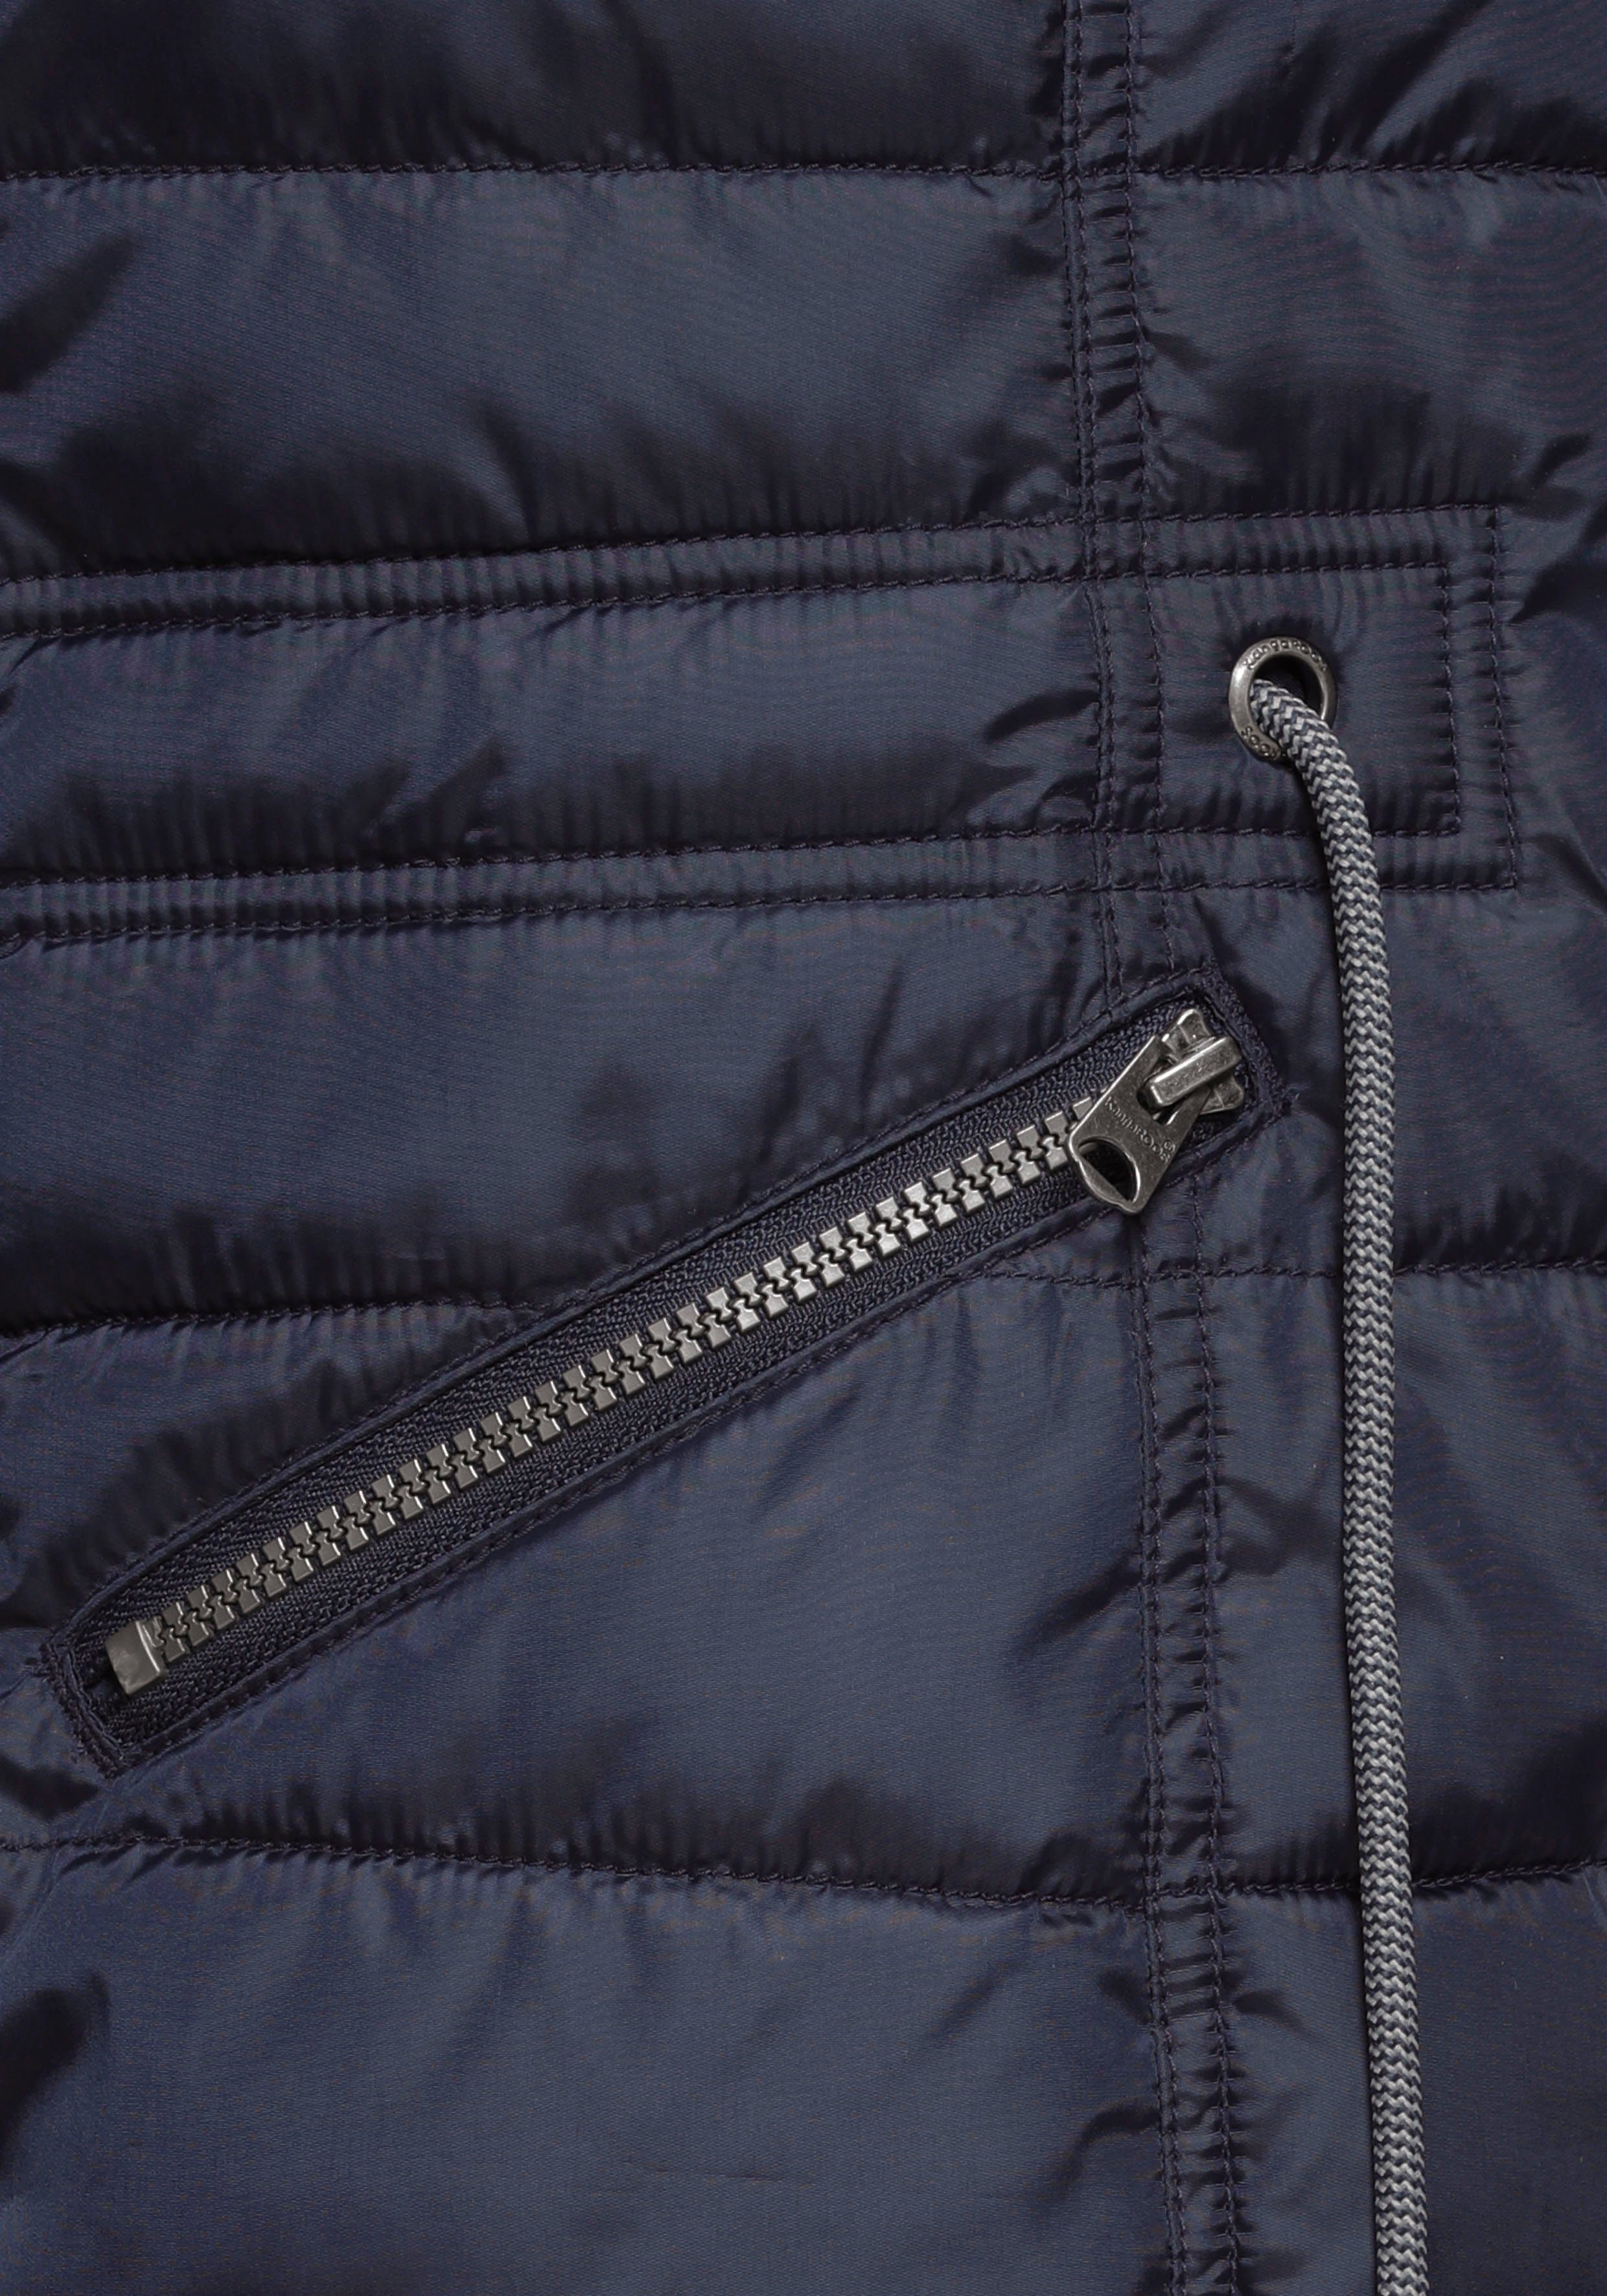 KangaROOS Steppjacke abnehmbarem an aus der blau mit nachhaltigem Kapuze (Jacke Fellimitat-Kragen kuscheligem, Material)